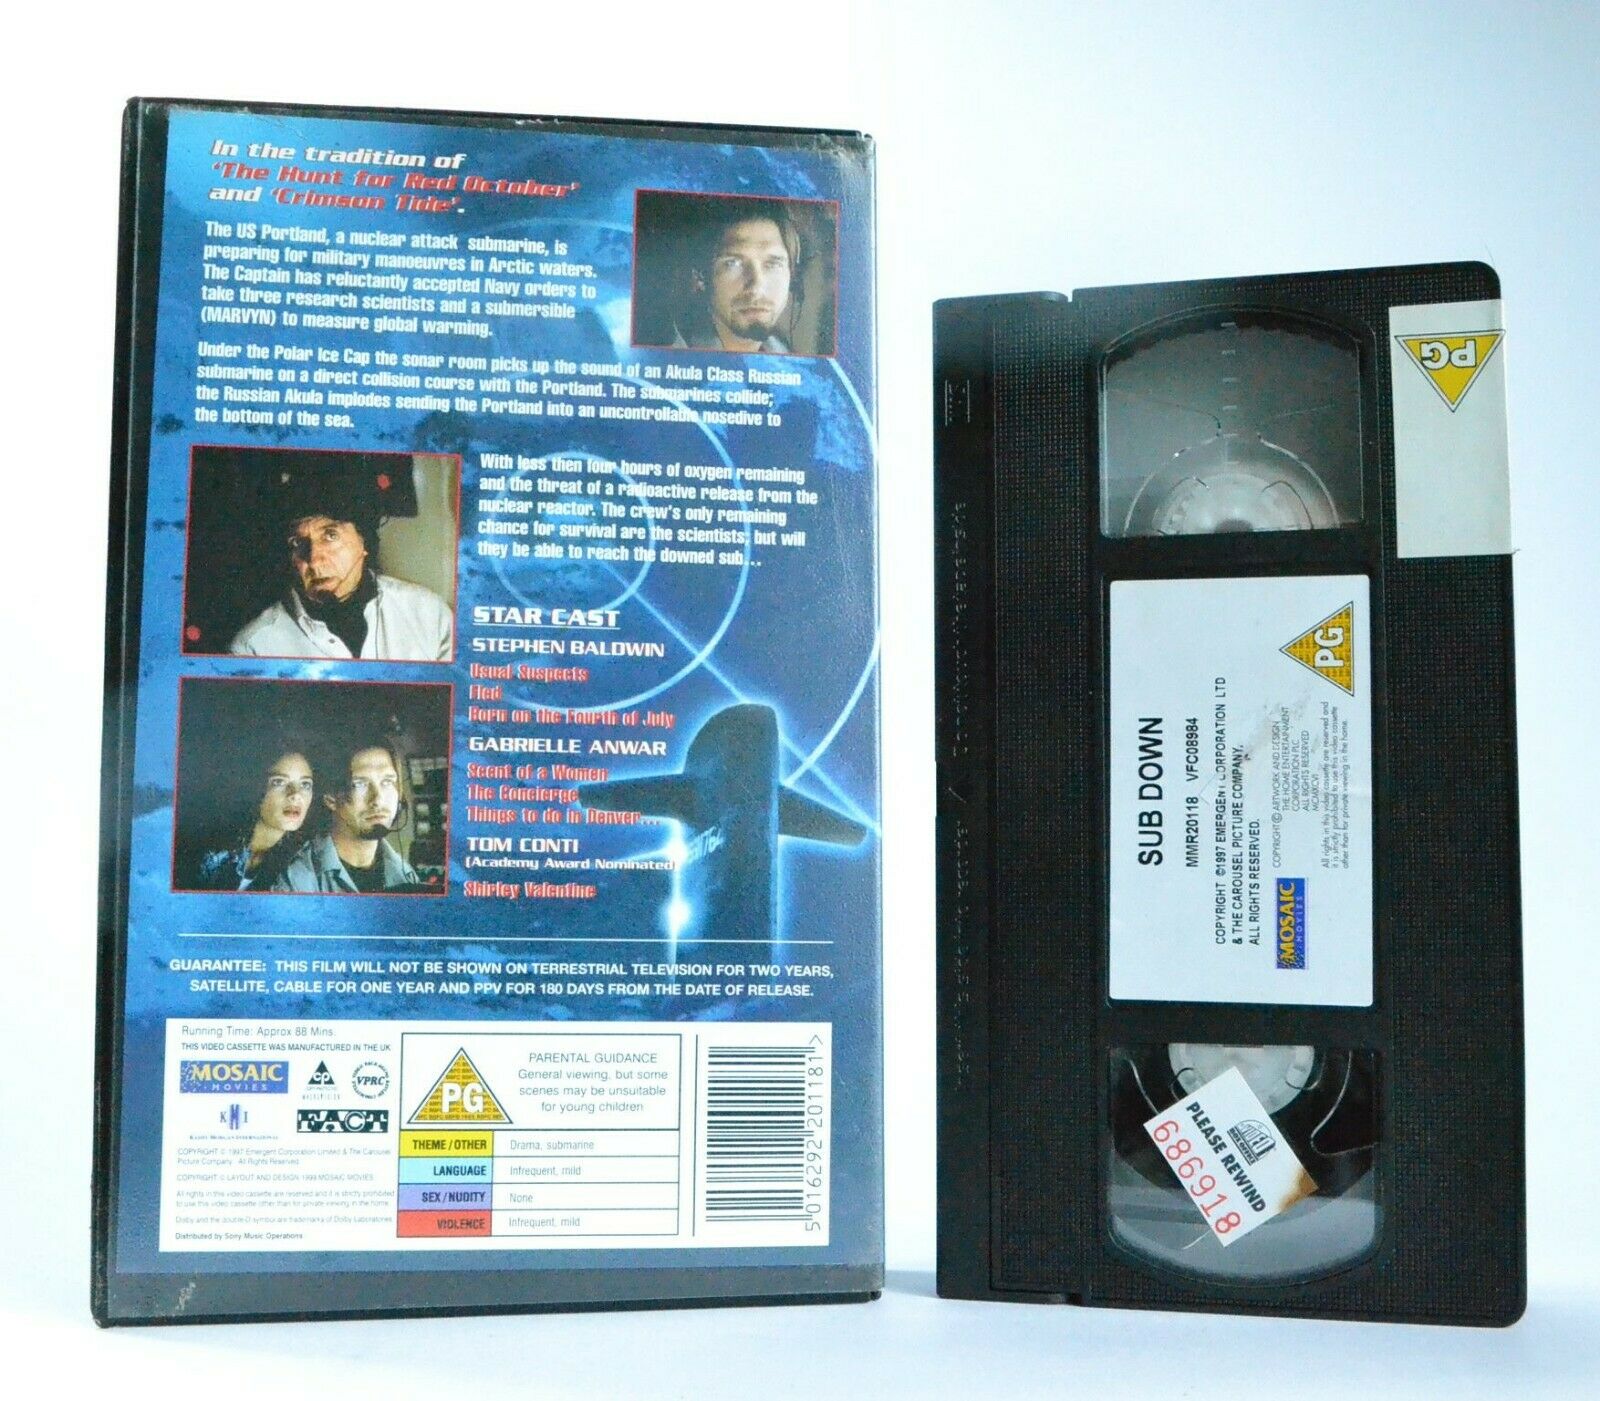 Sub Down: Drama (1997) - Take The Dive - Large Box - Ex-Rental - S.Baldwin - VHS-